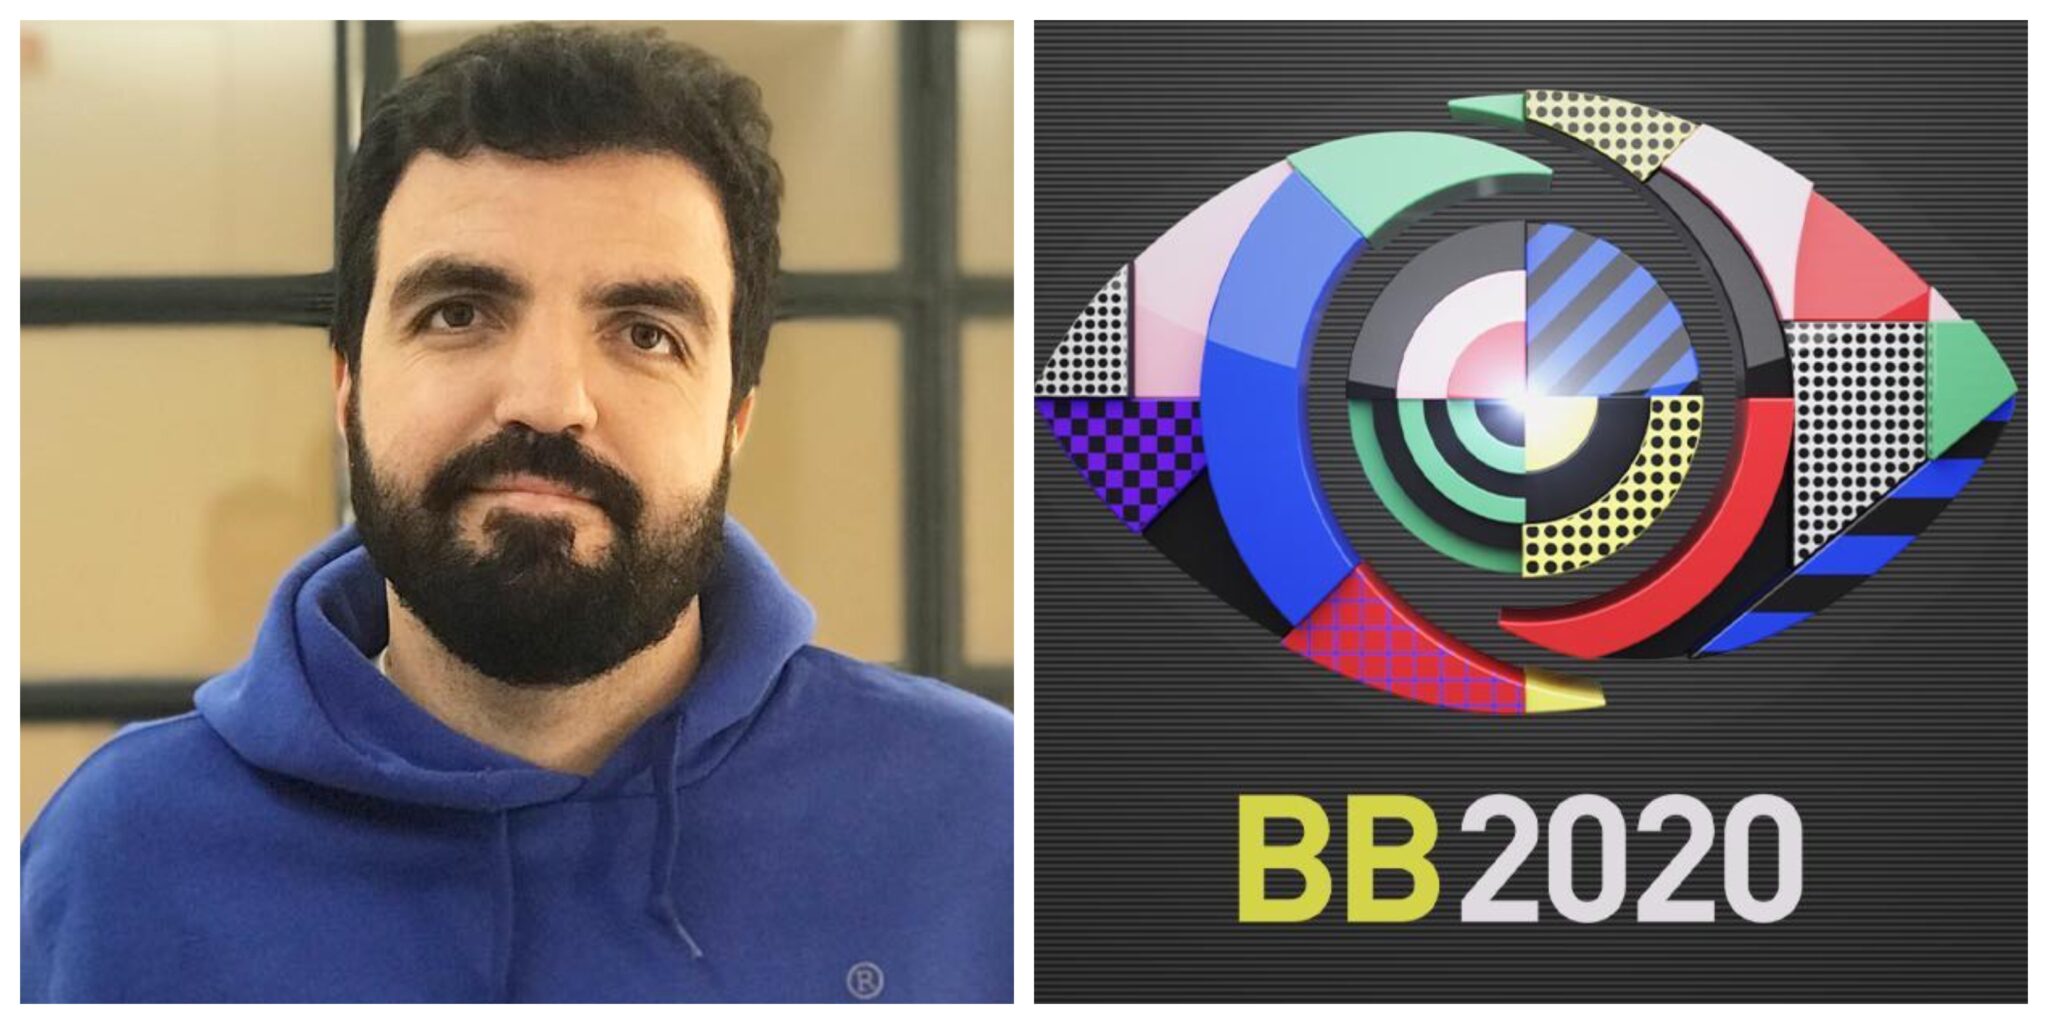 salvador martinha big brother scaled Big Brother 2020. Salvador Martinha ataca TVI: "Deveria chamar-se de BB Bullying"